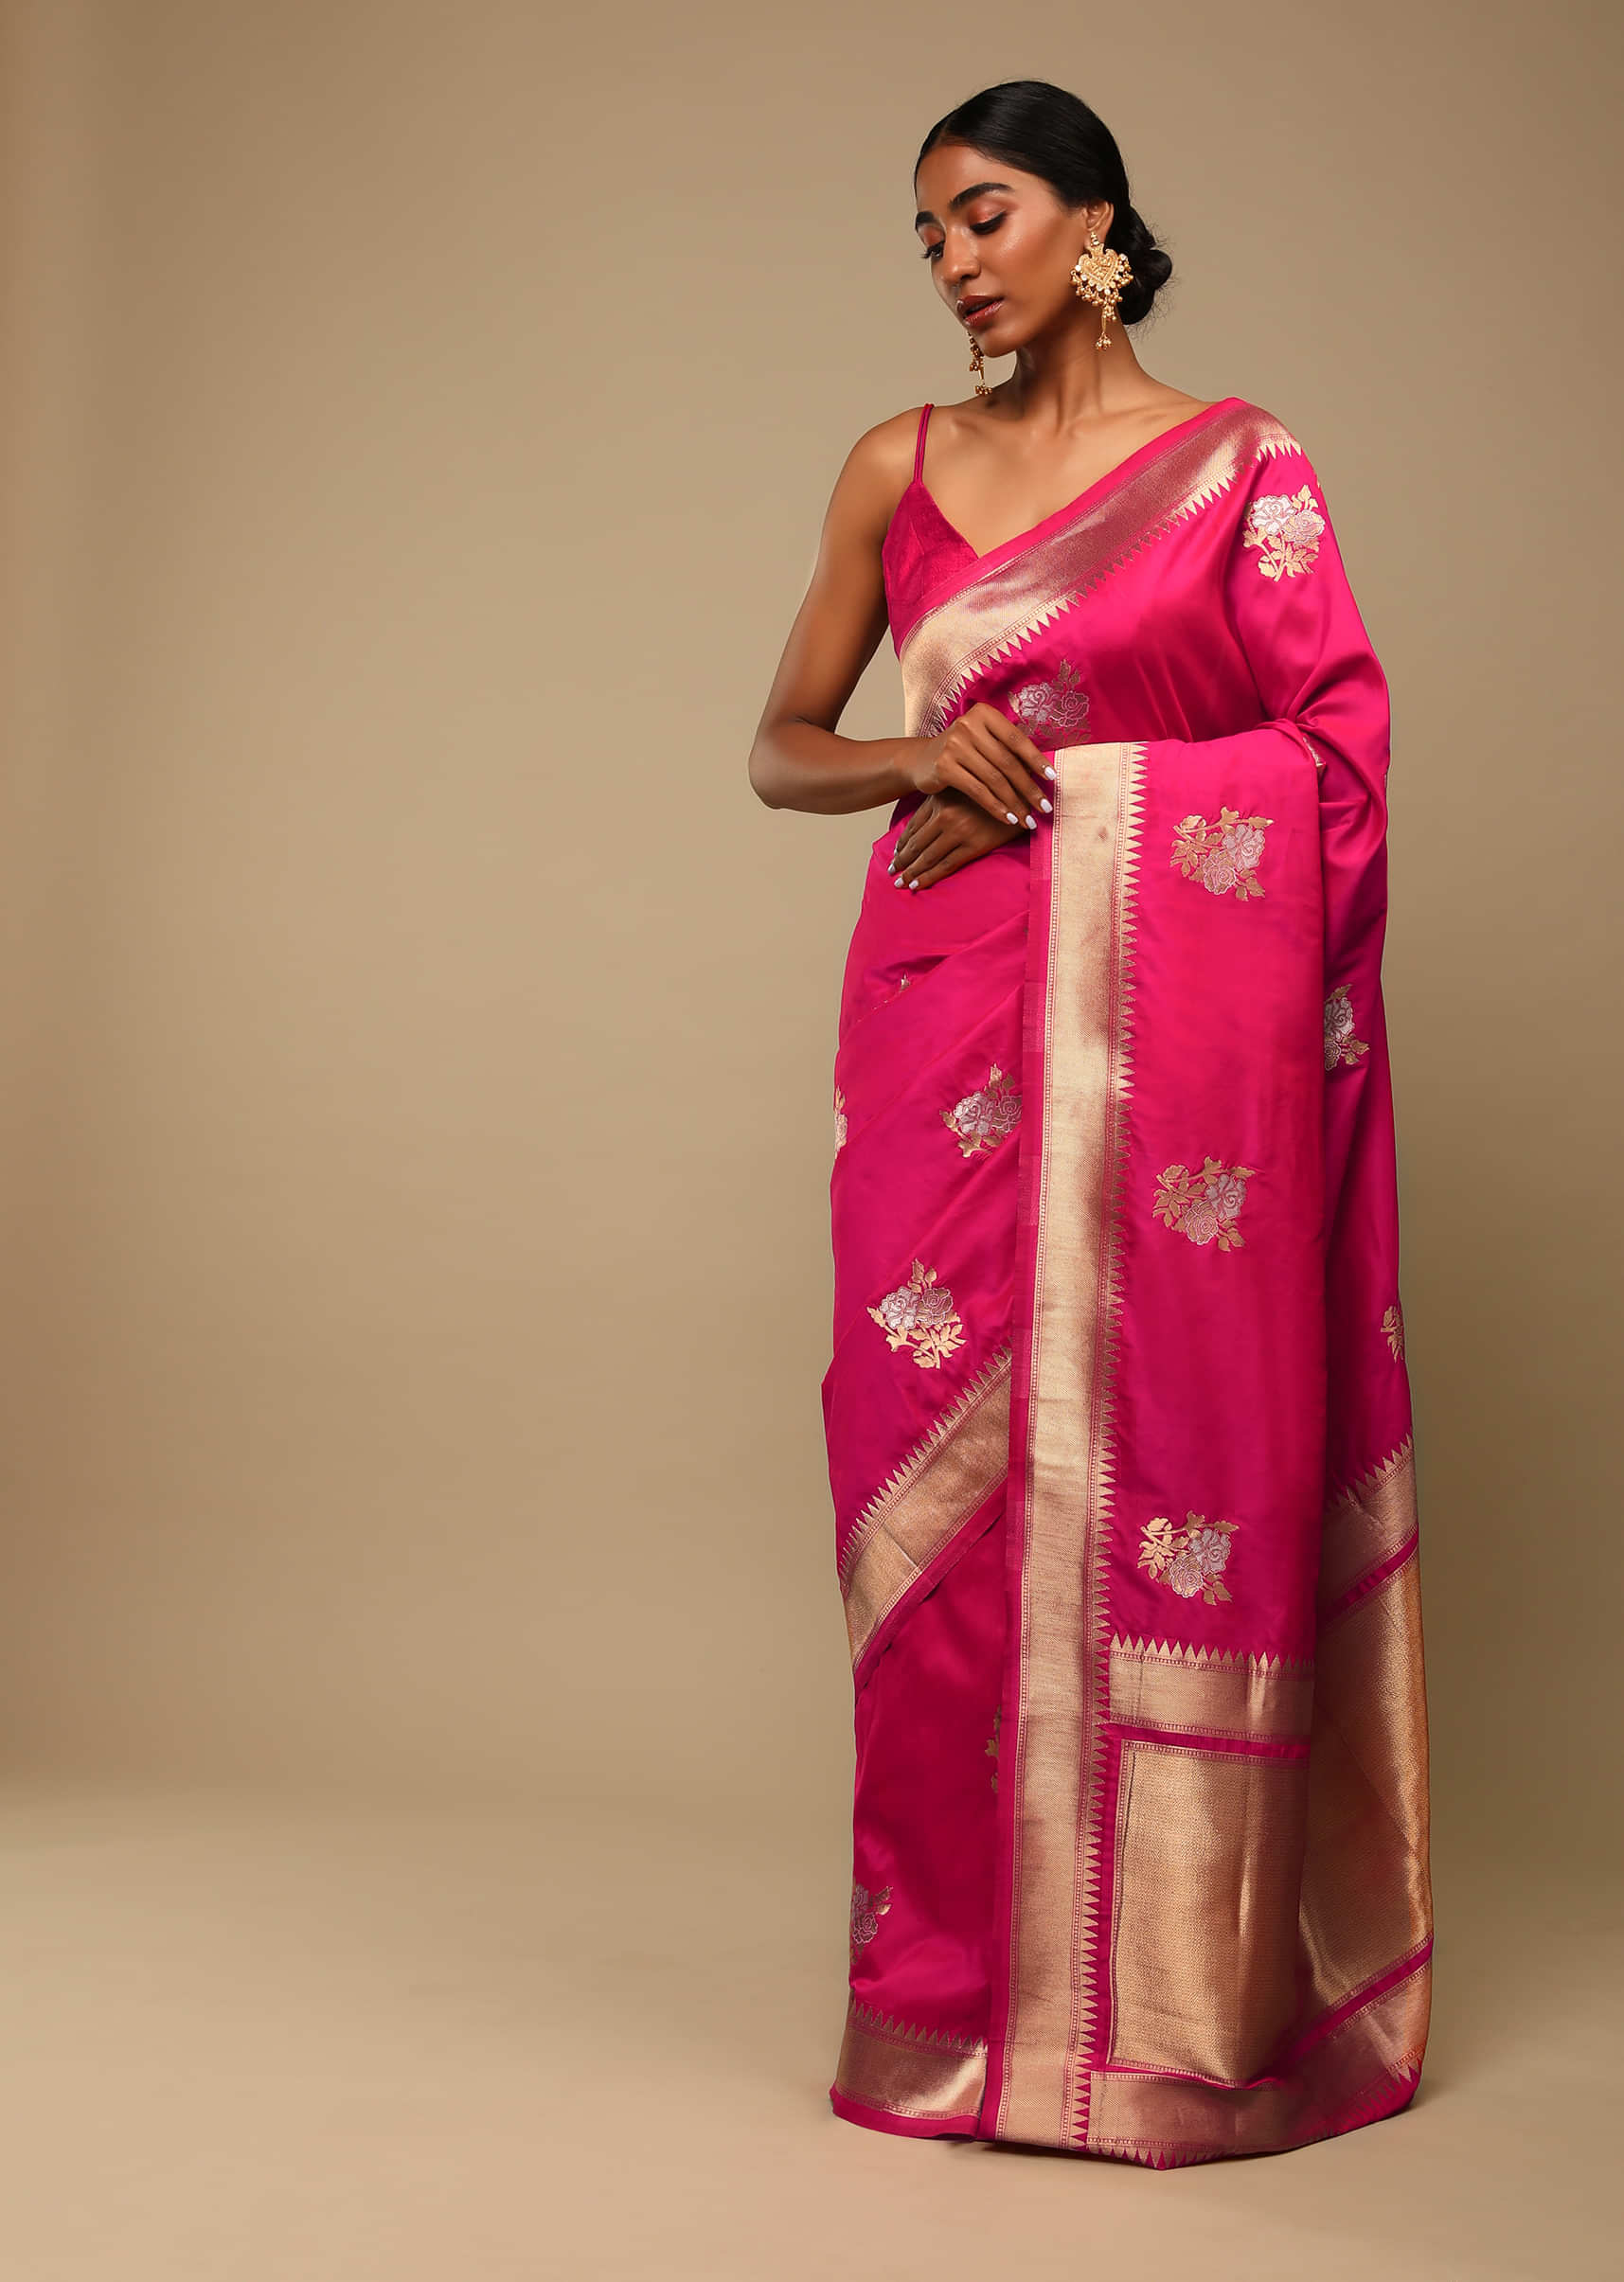 Dusty Pink Saree with white designer blouse - DRAPEMODA